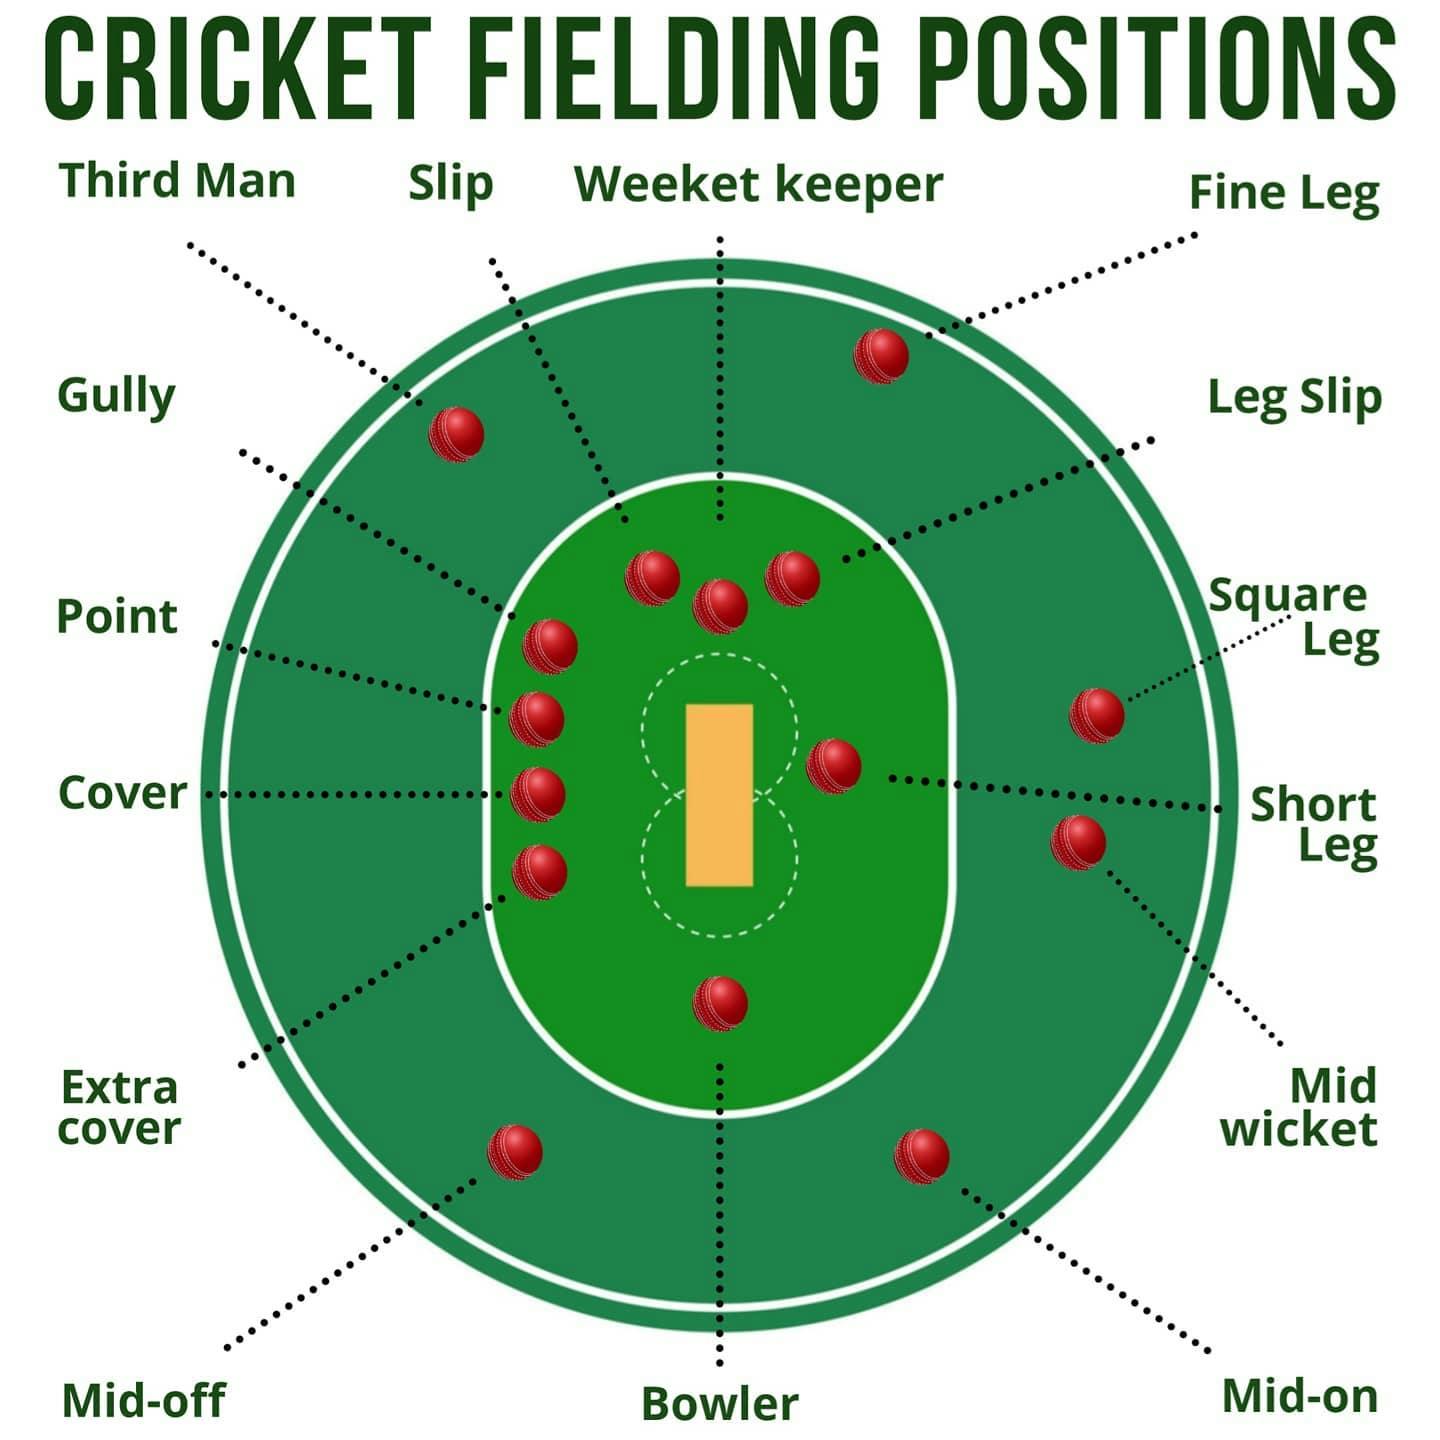 Cricket Fielding Positions.jpg